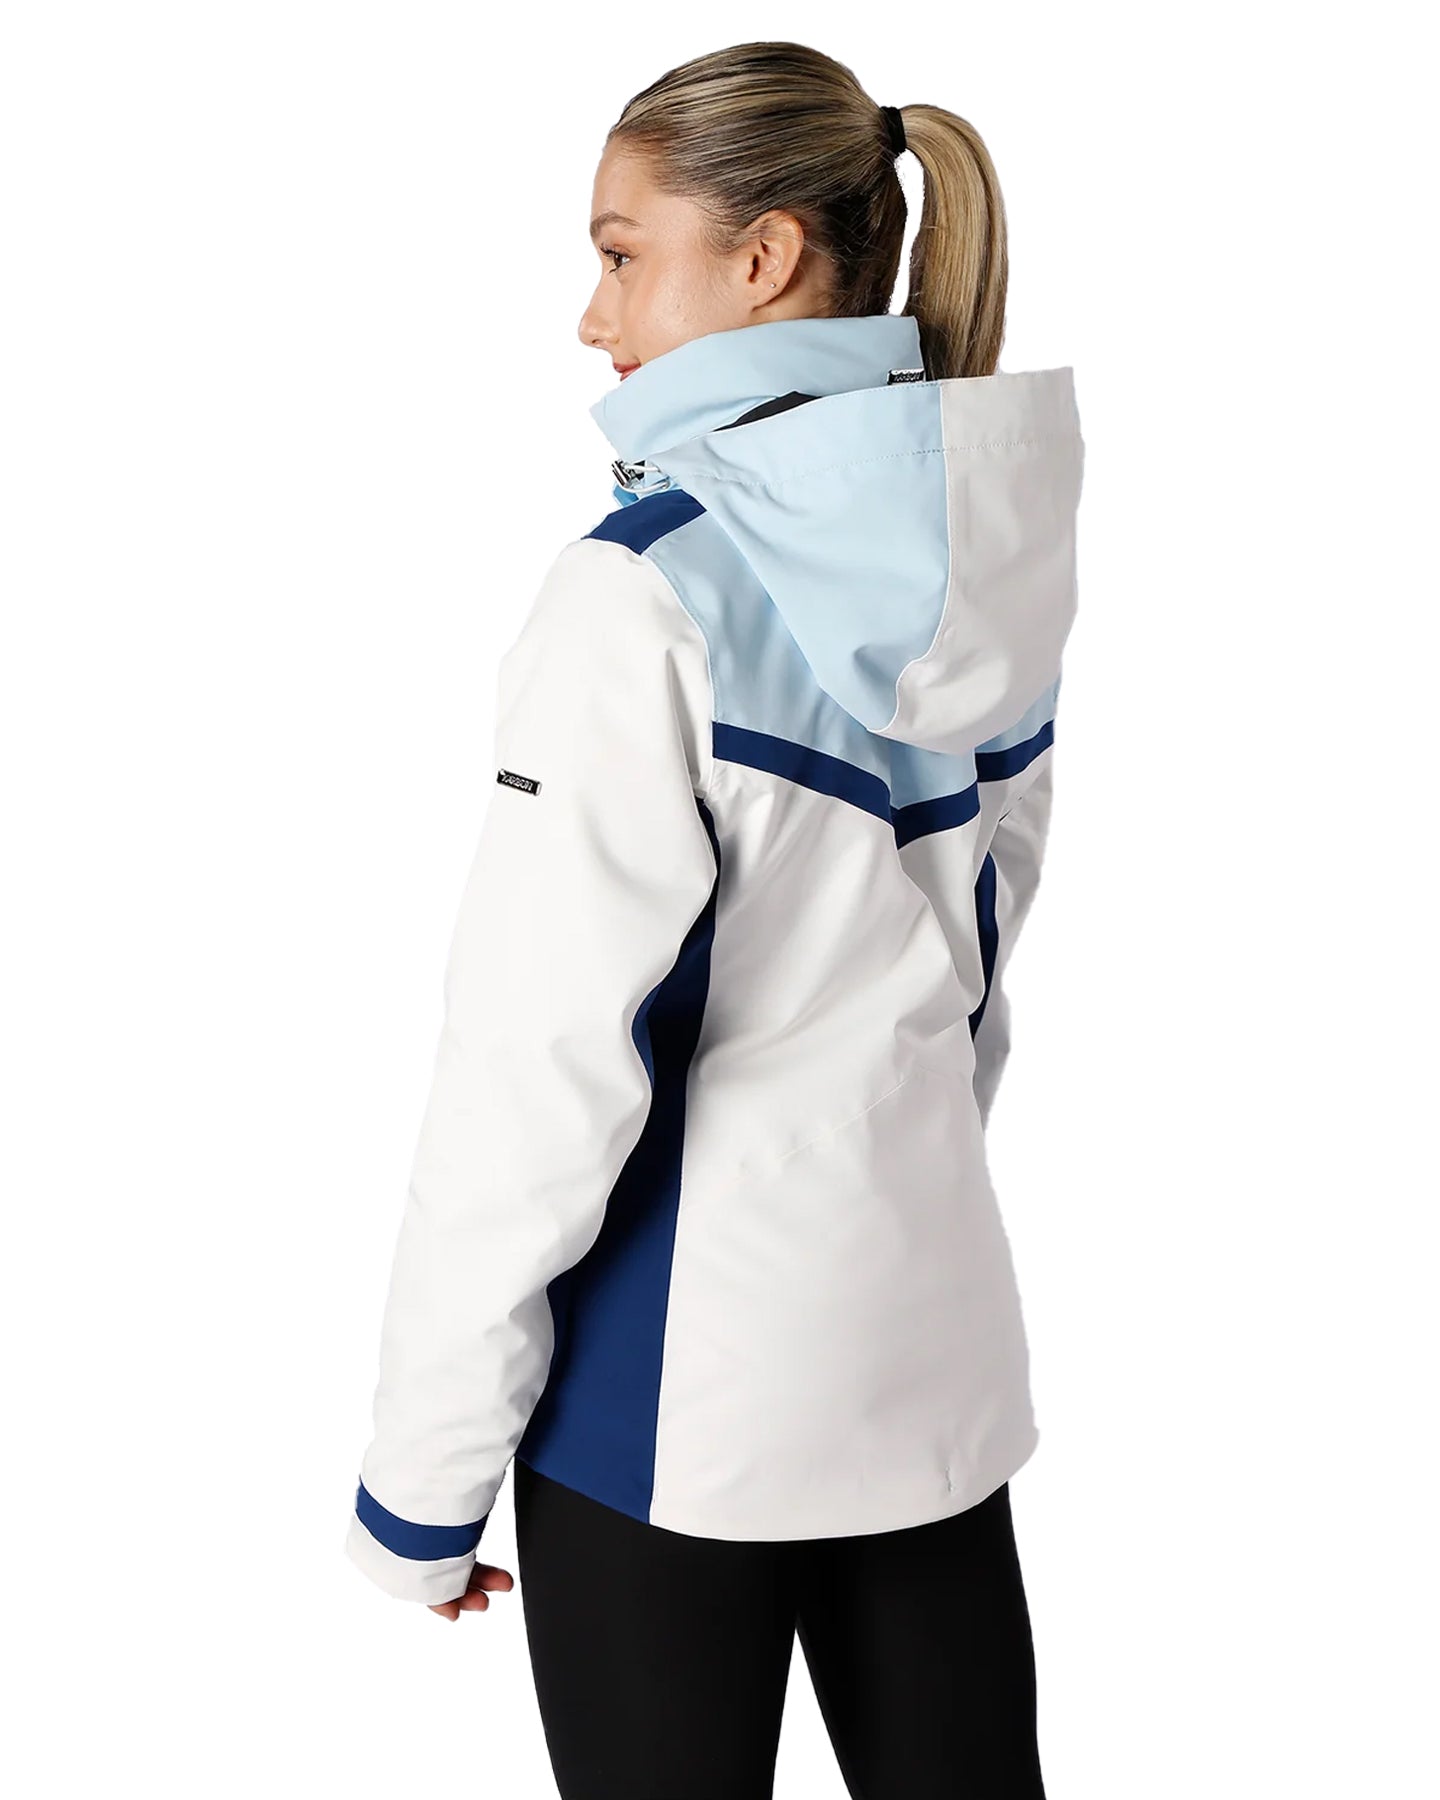 Karbon Solitare Diamond Tech Women's Snow Jacket - Arctic White Women's Snow Jackets - SnowSkiersWarehouse